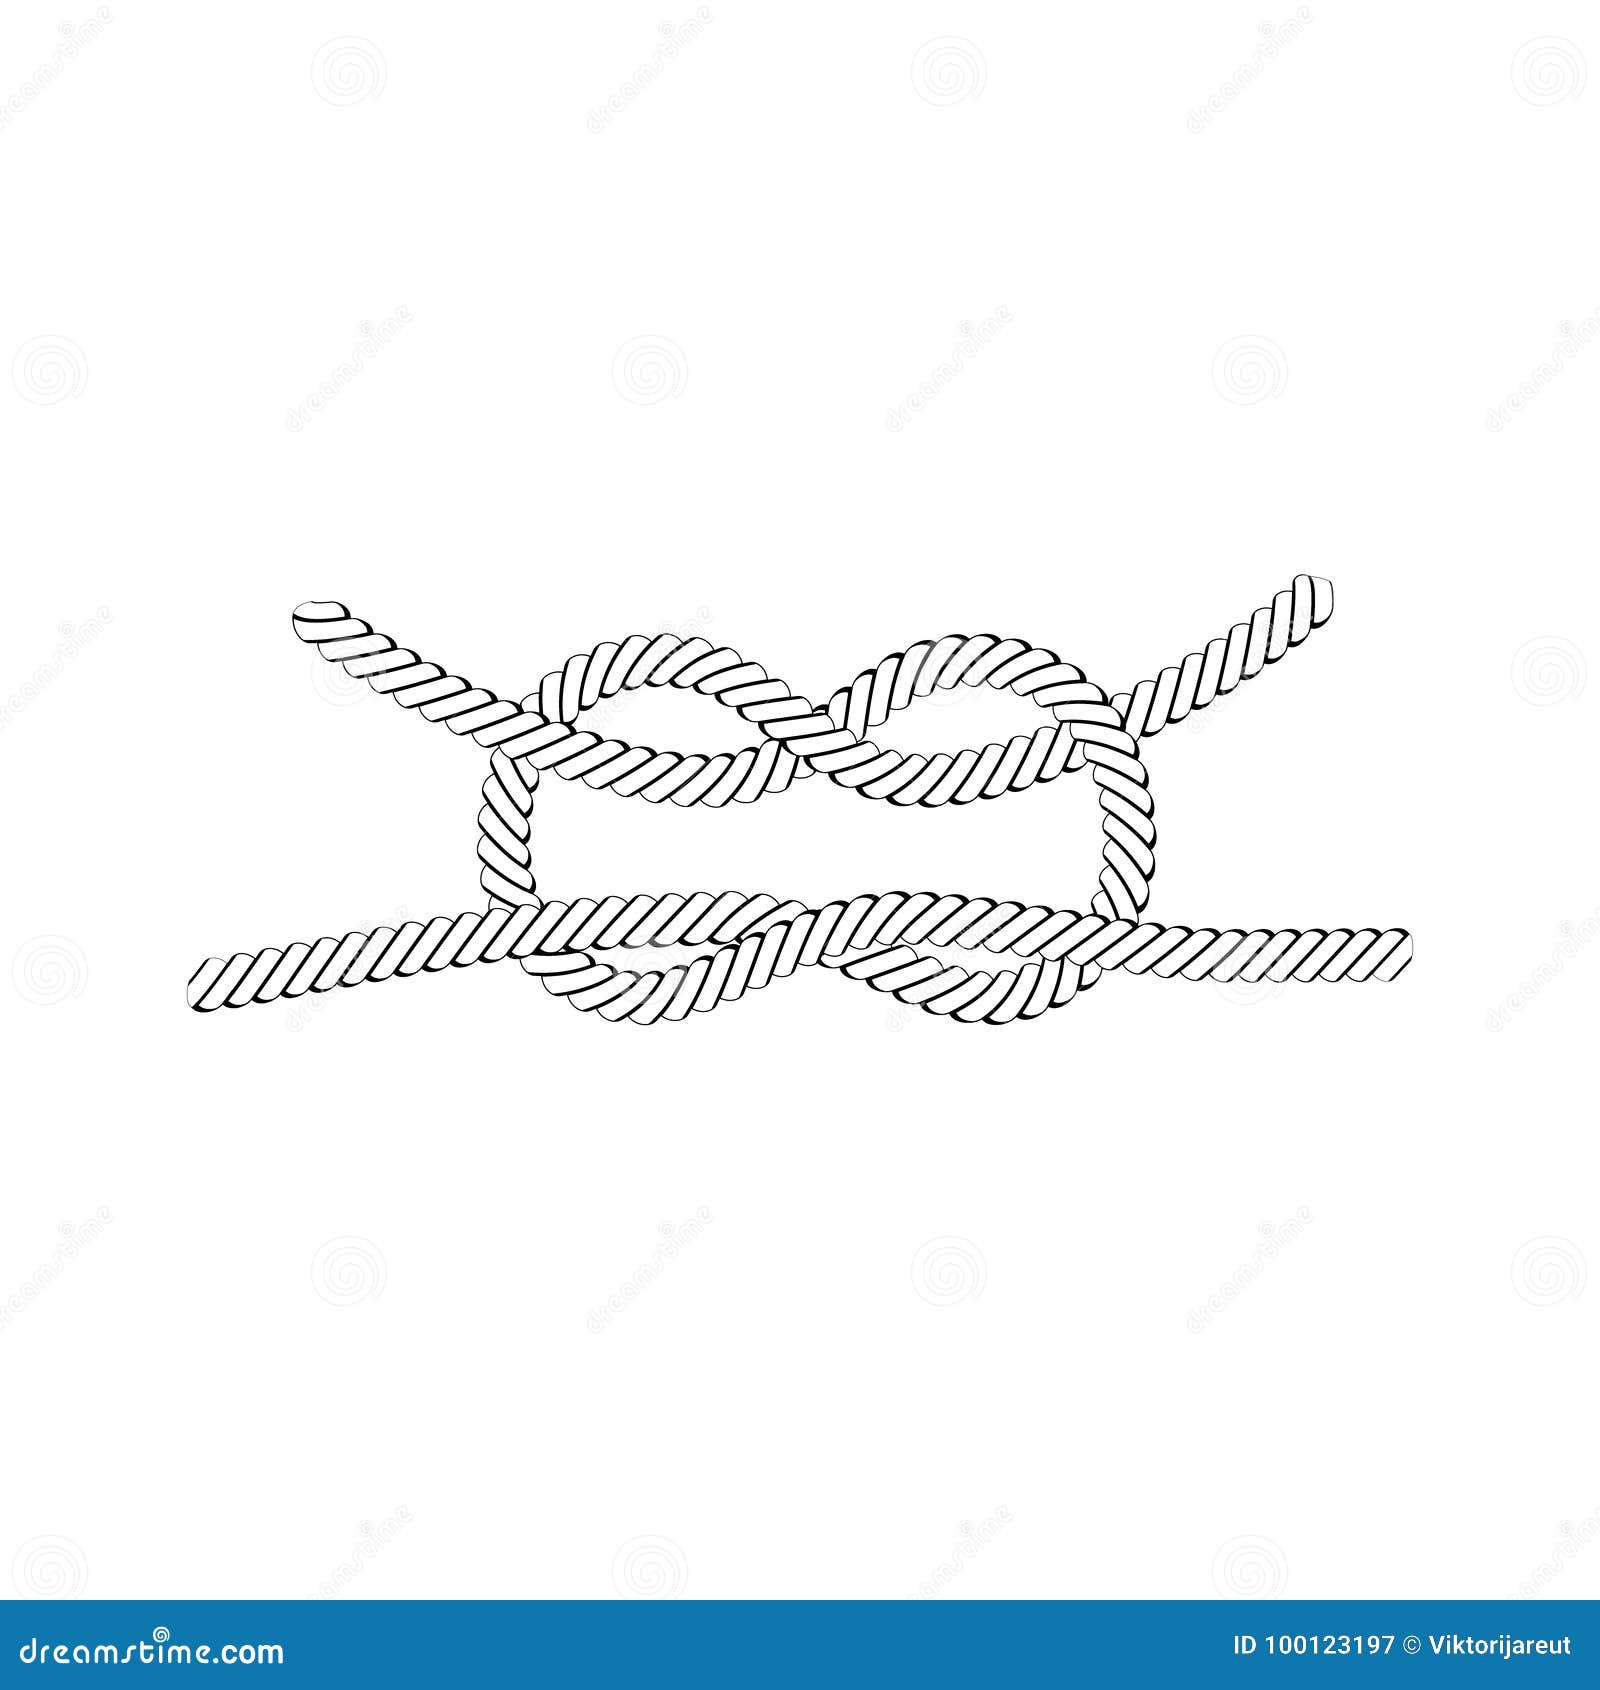 Nautical rope knots stock illustration. Illustration of decoration ...